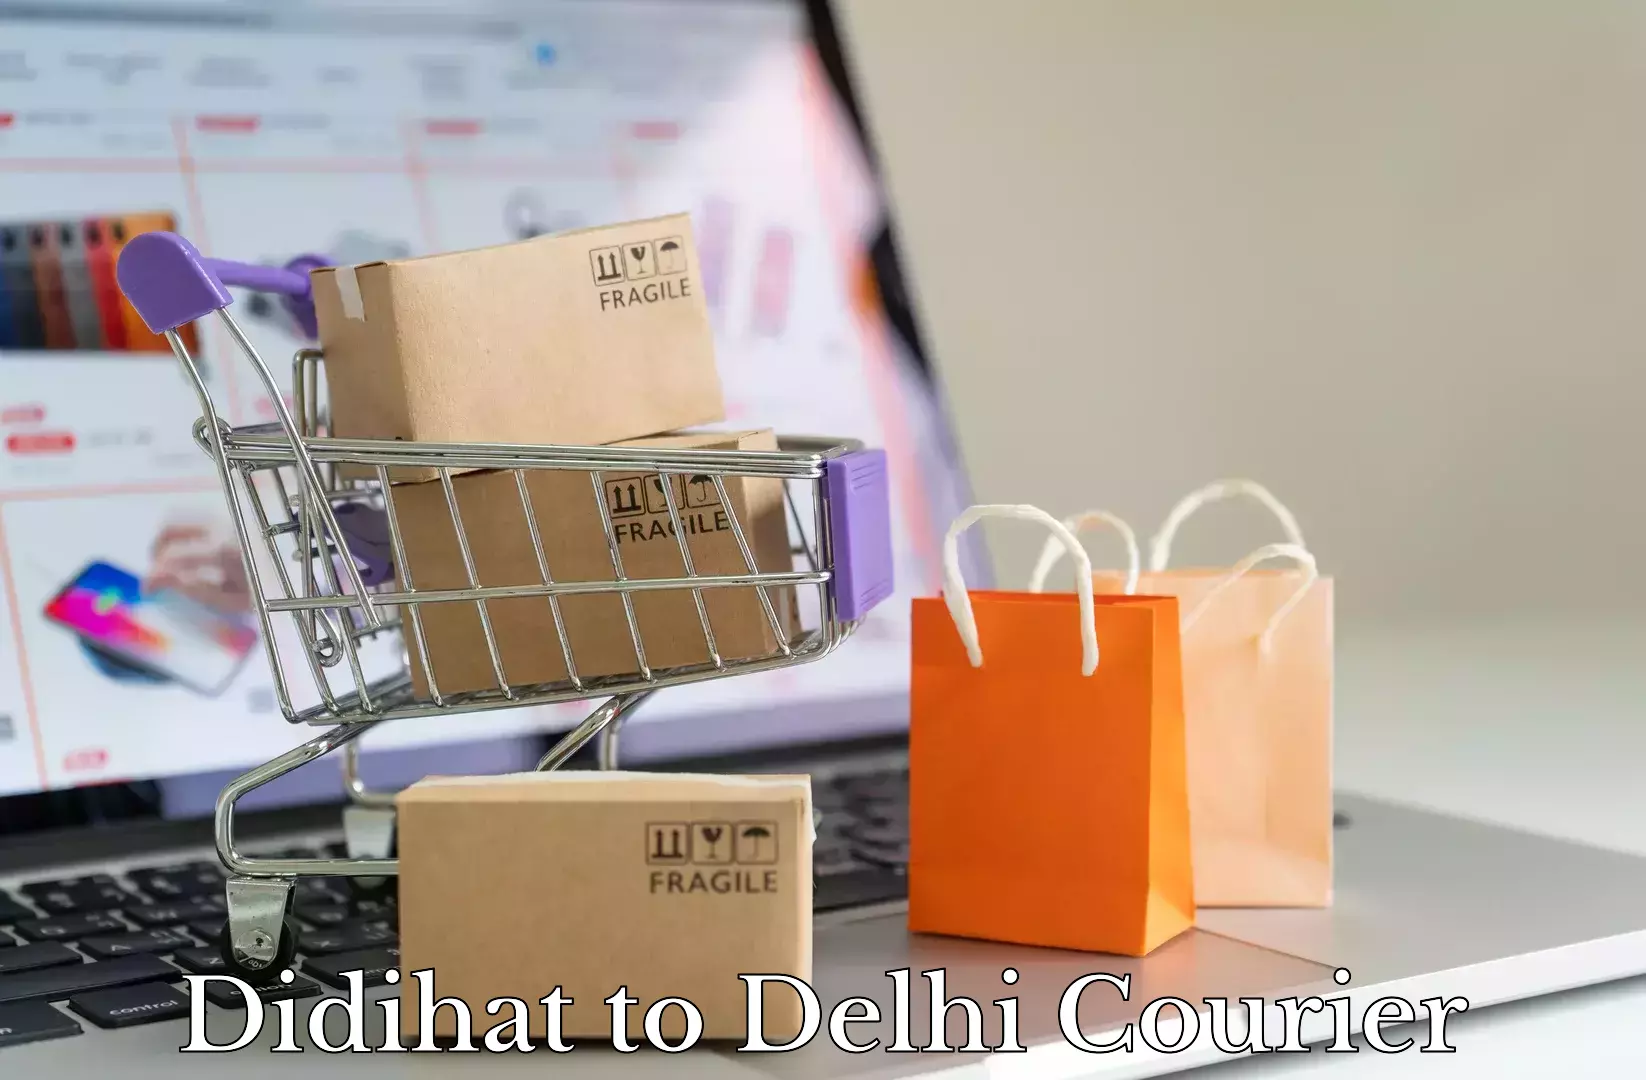 Furniture moving experts Didihat to East Delhi